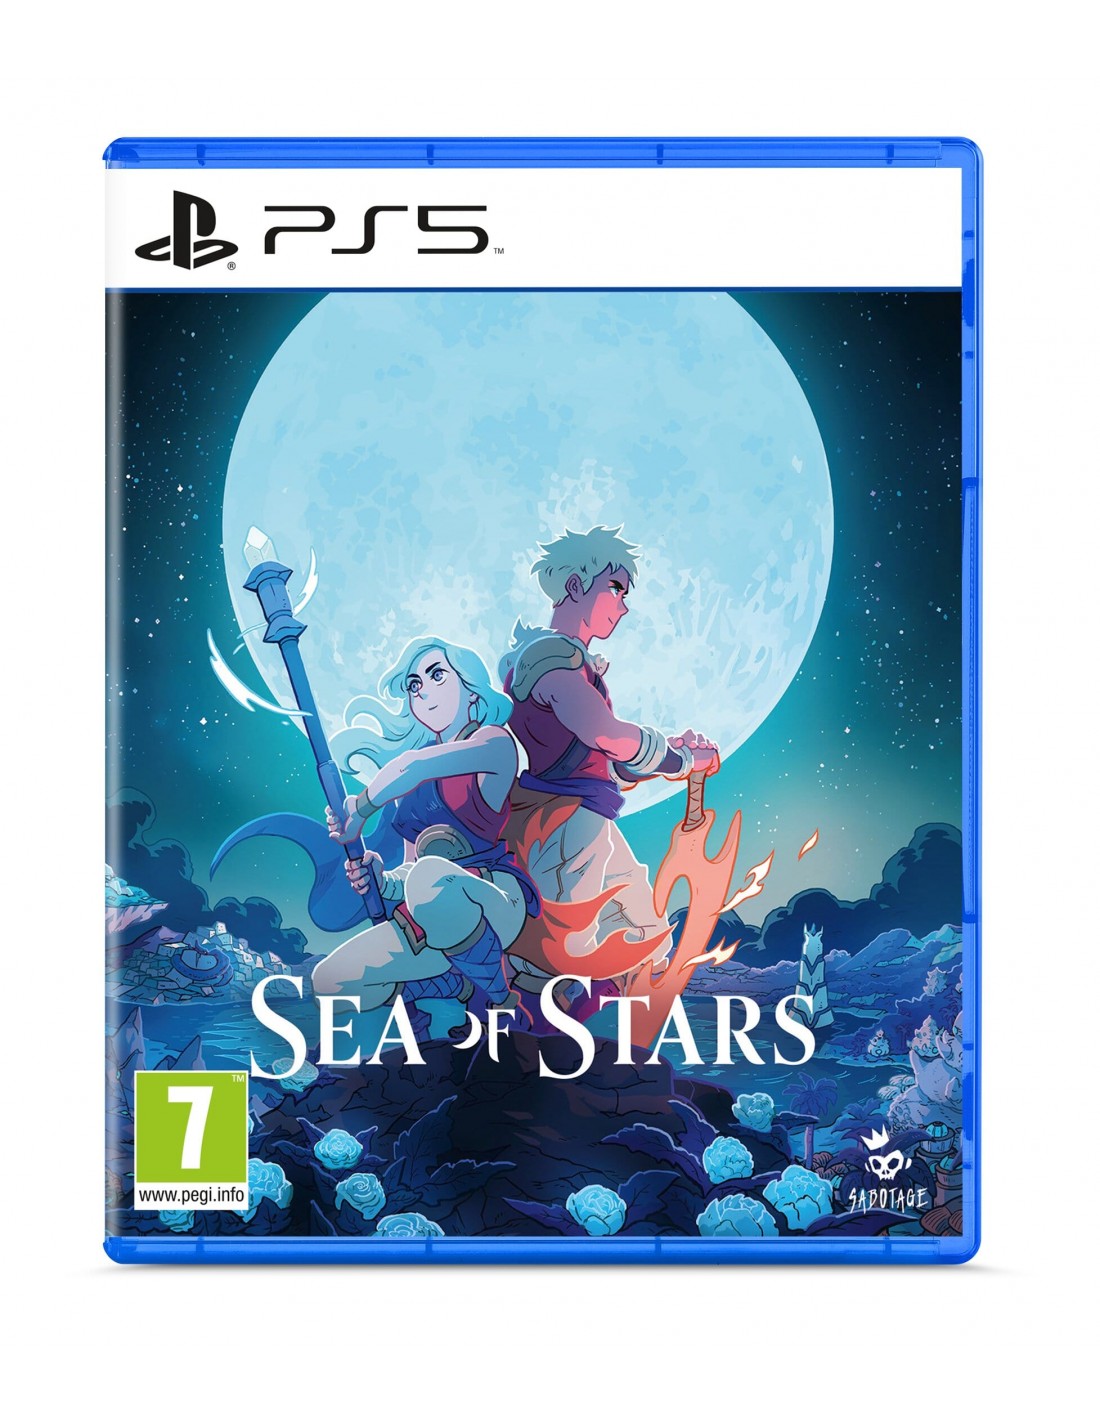 PS5 - Sea of Stars